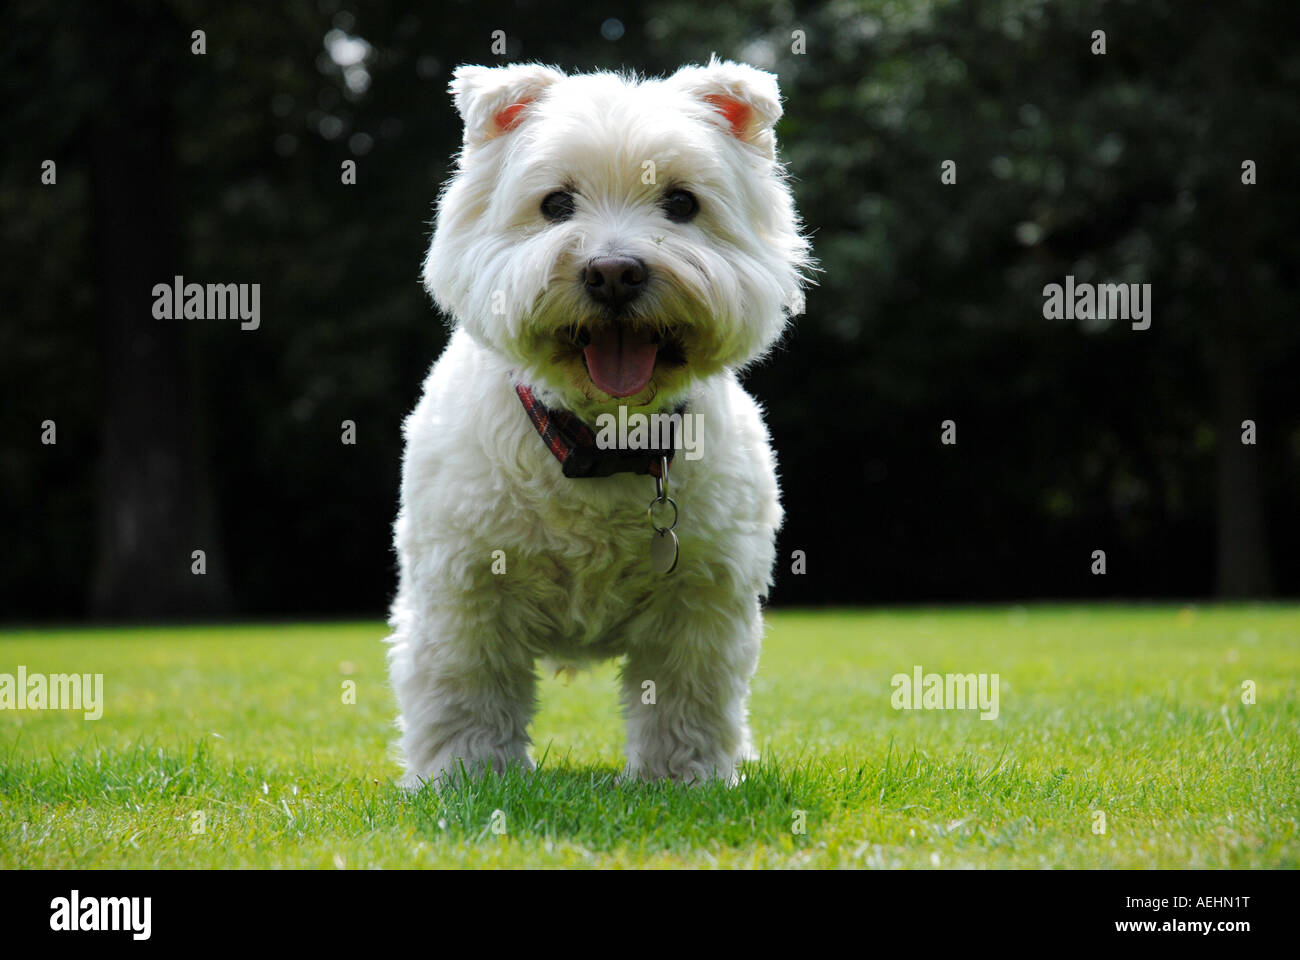 West Highland Terrier dog Stock Photo